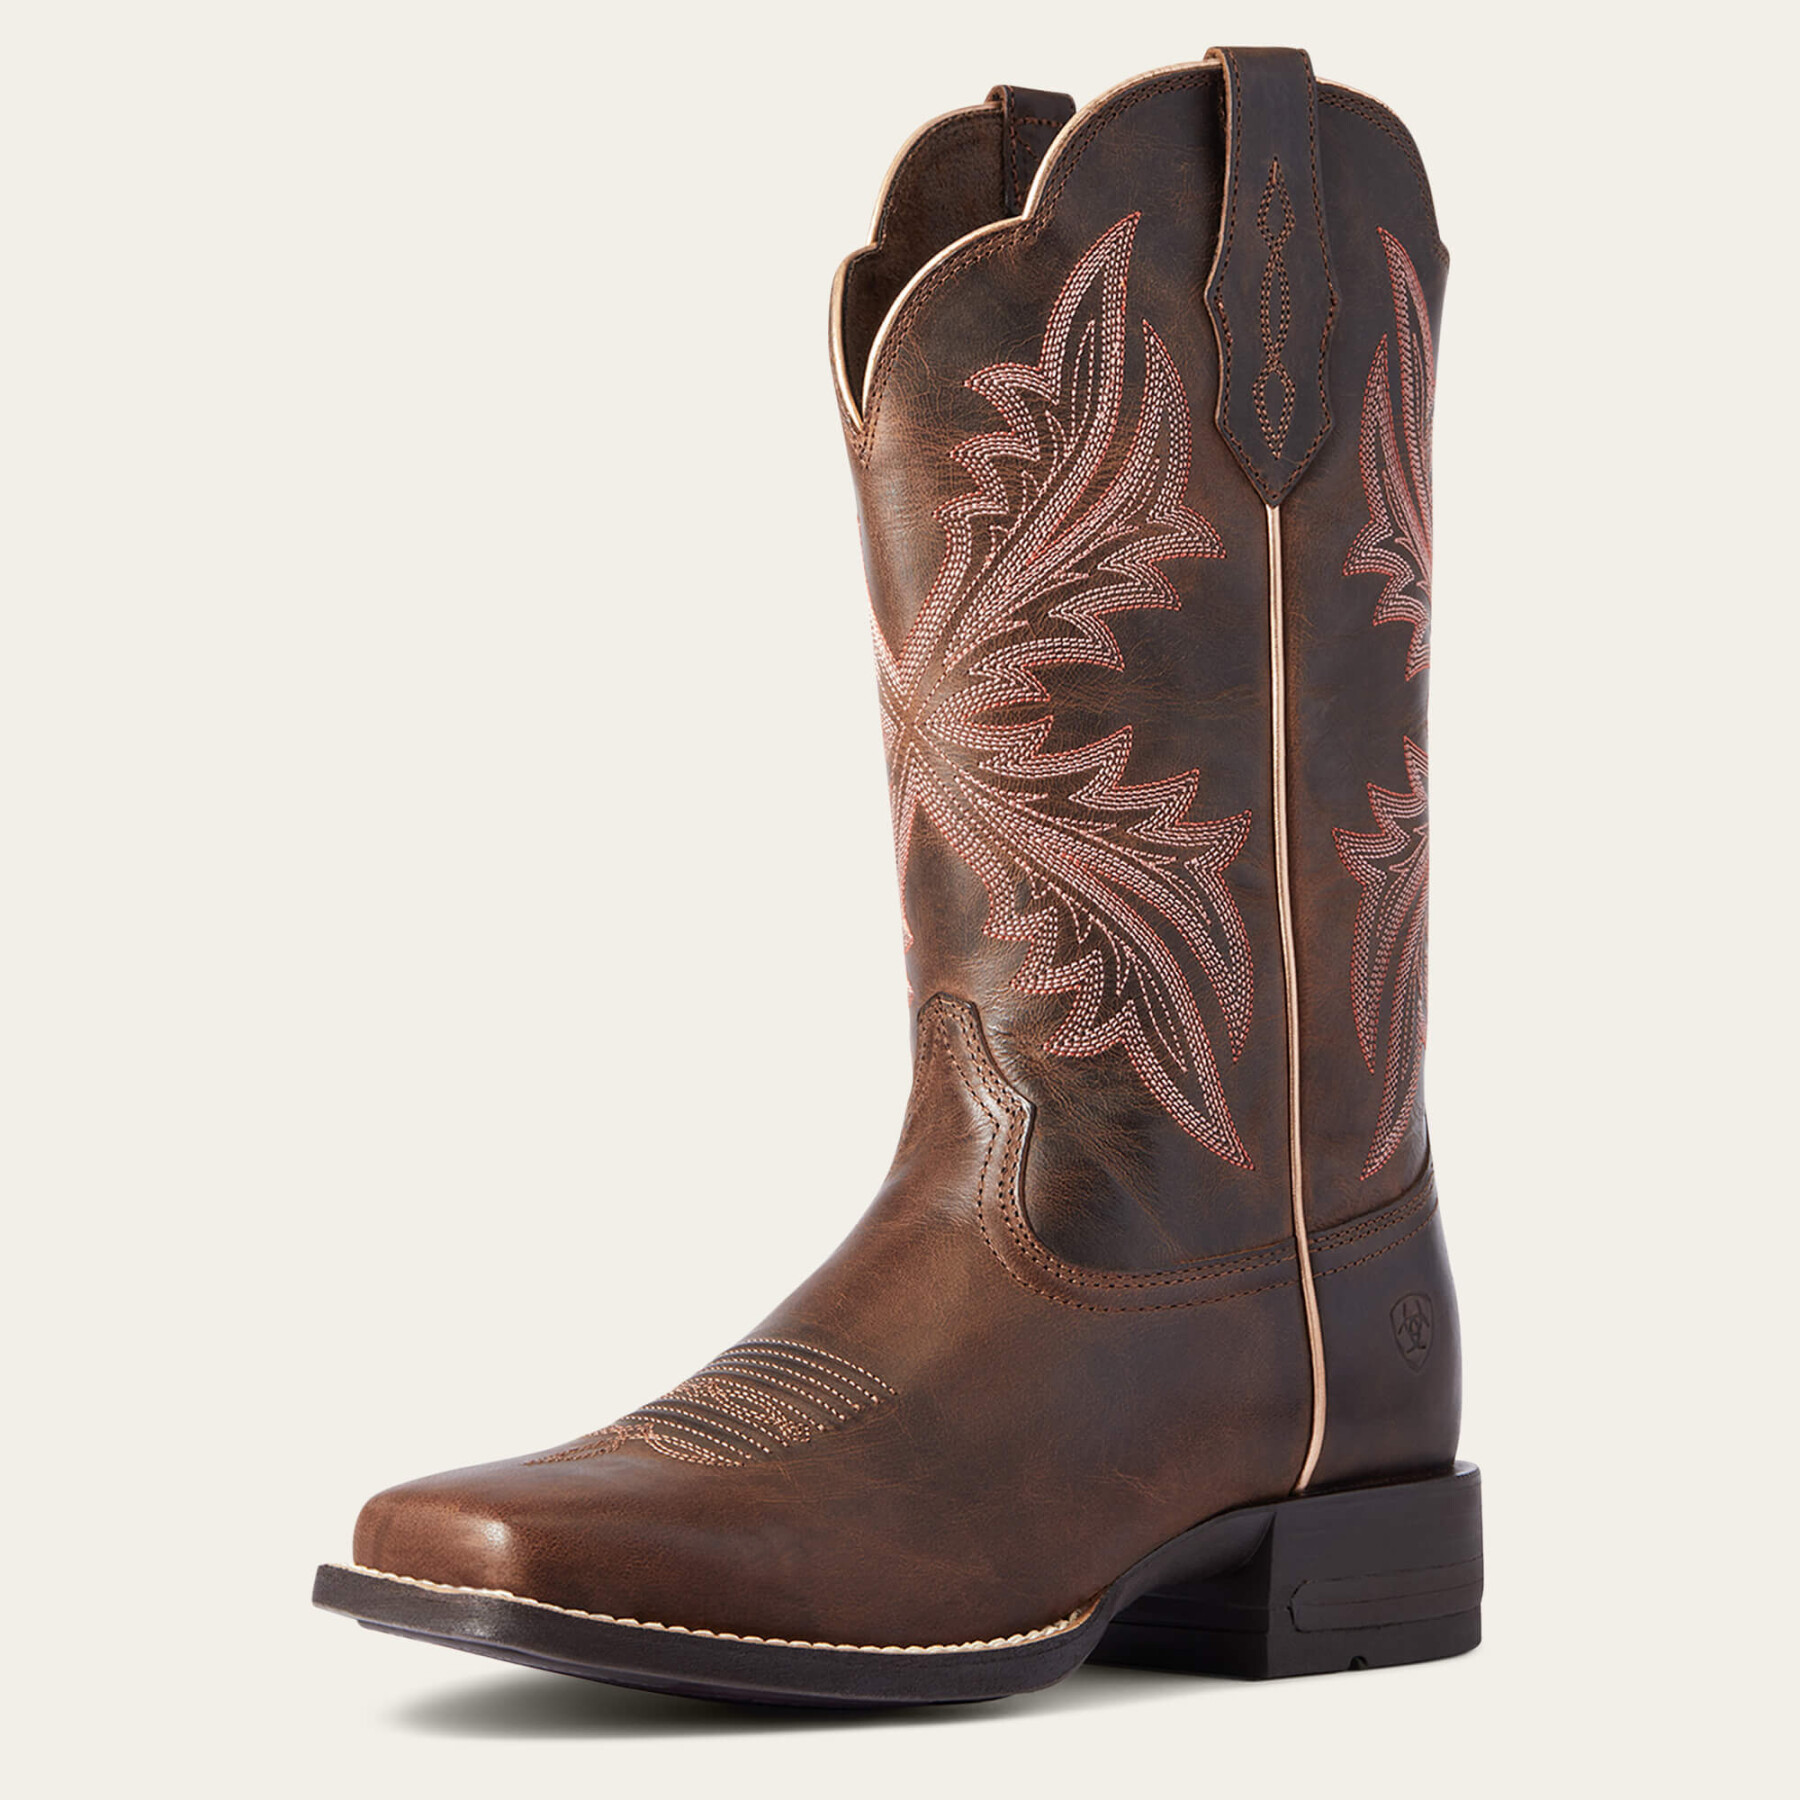 Women's leather western boots Ariat West Bound Sassy